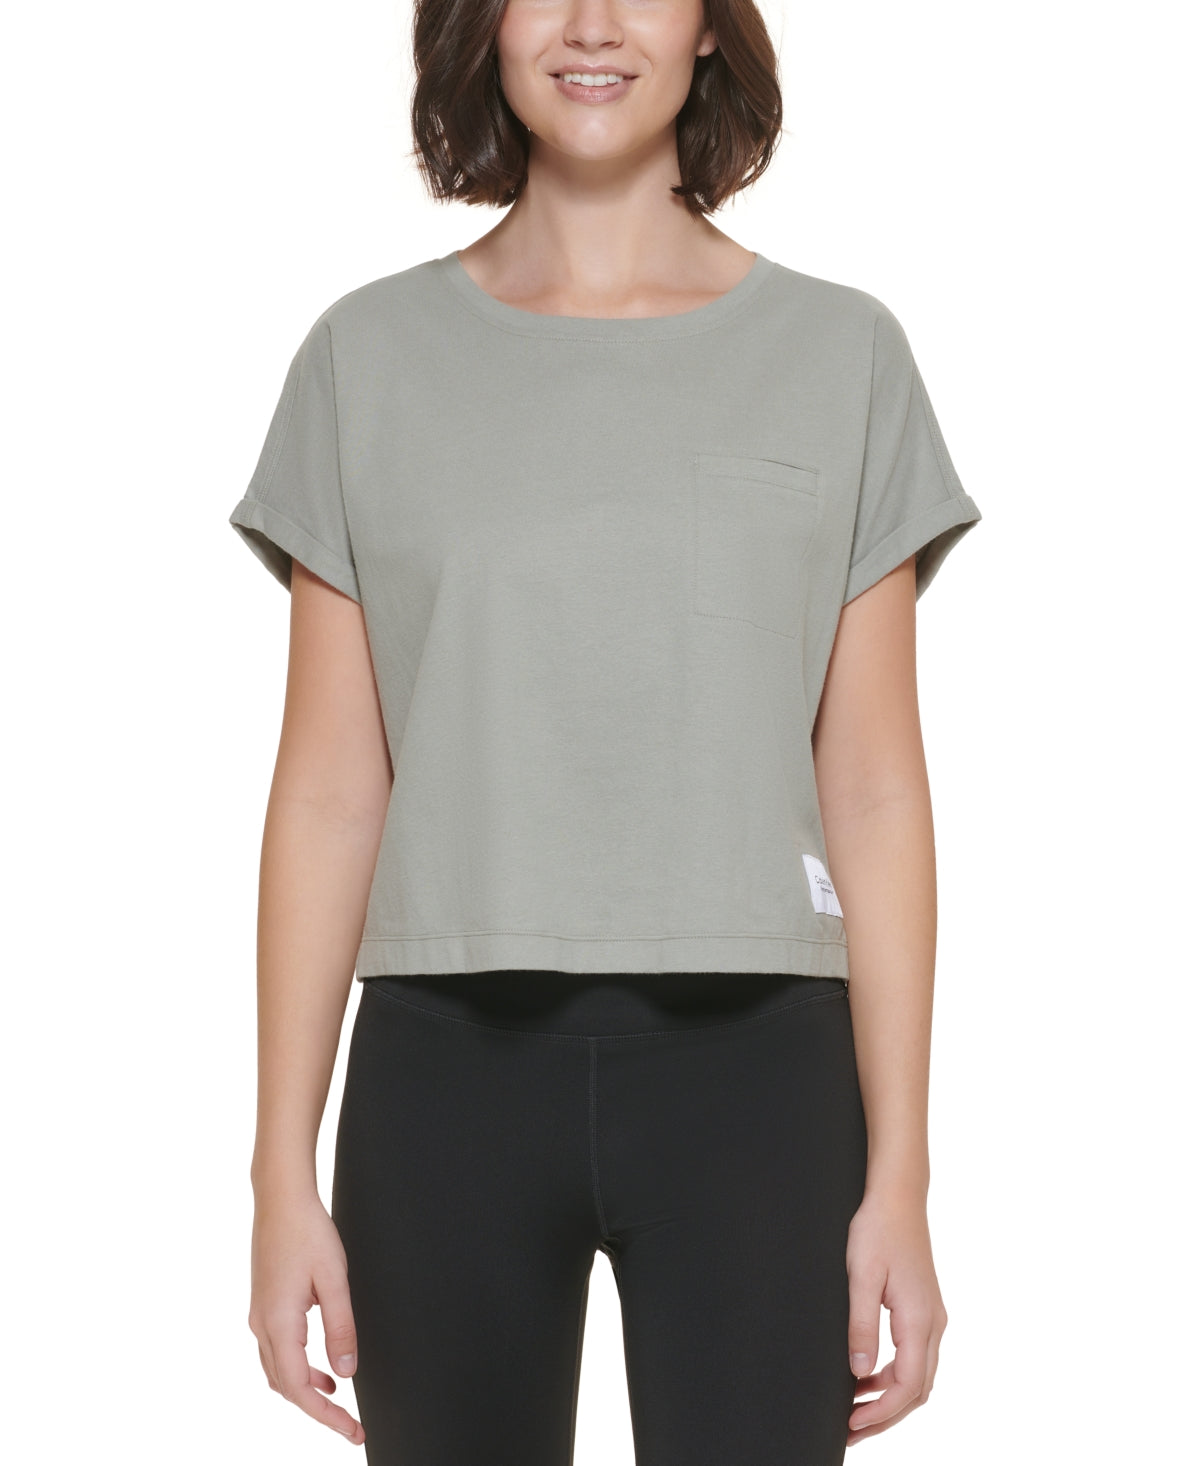 Calvin Klein Women's Bungee Hem Pocket Cotton T-Shirt Green Size